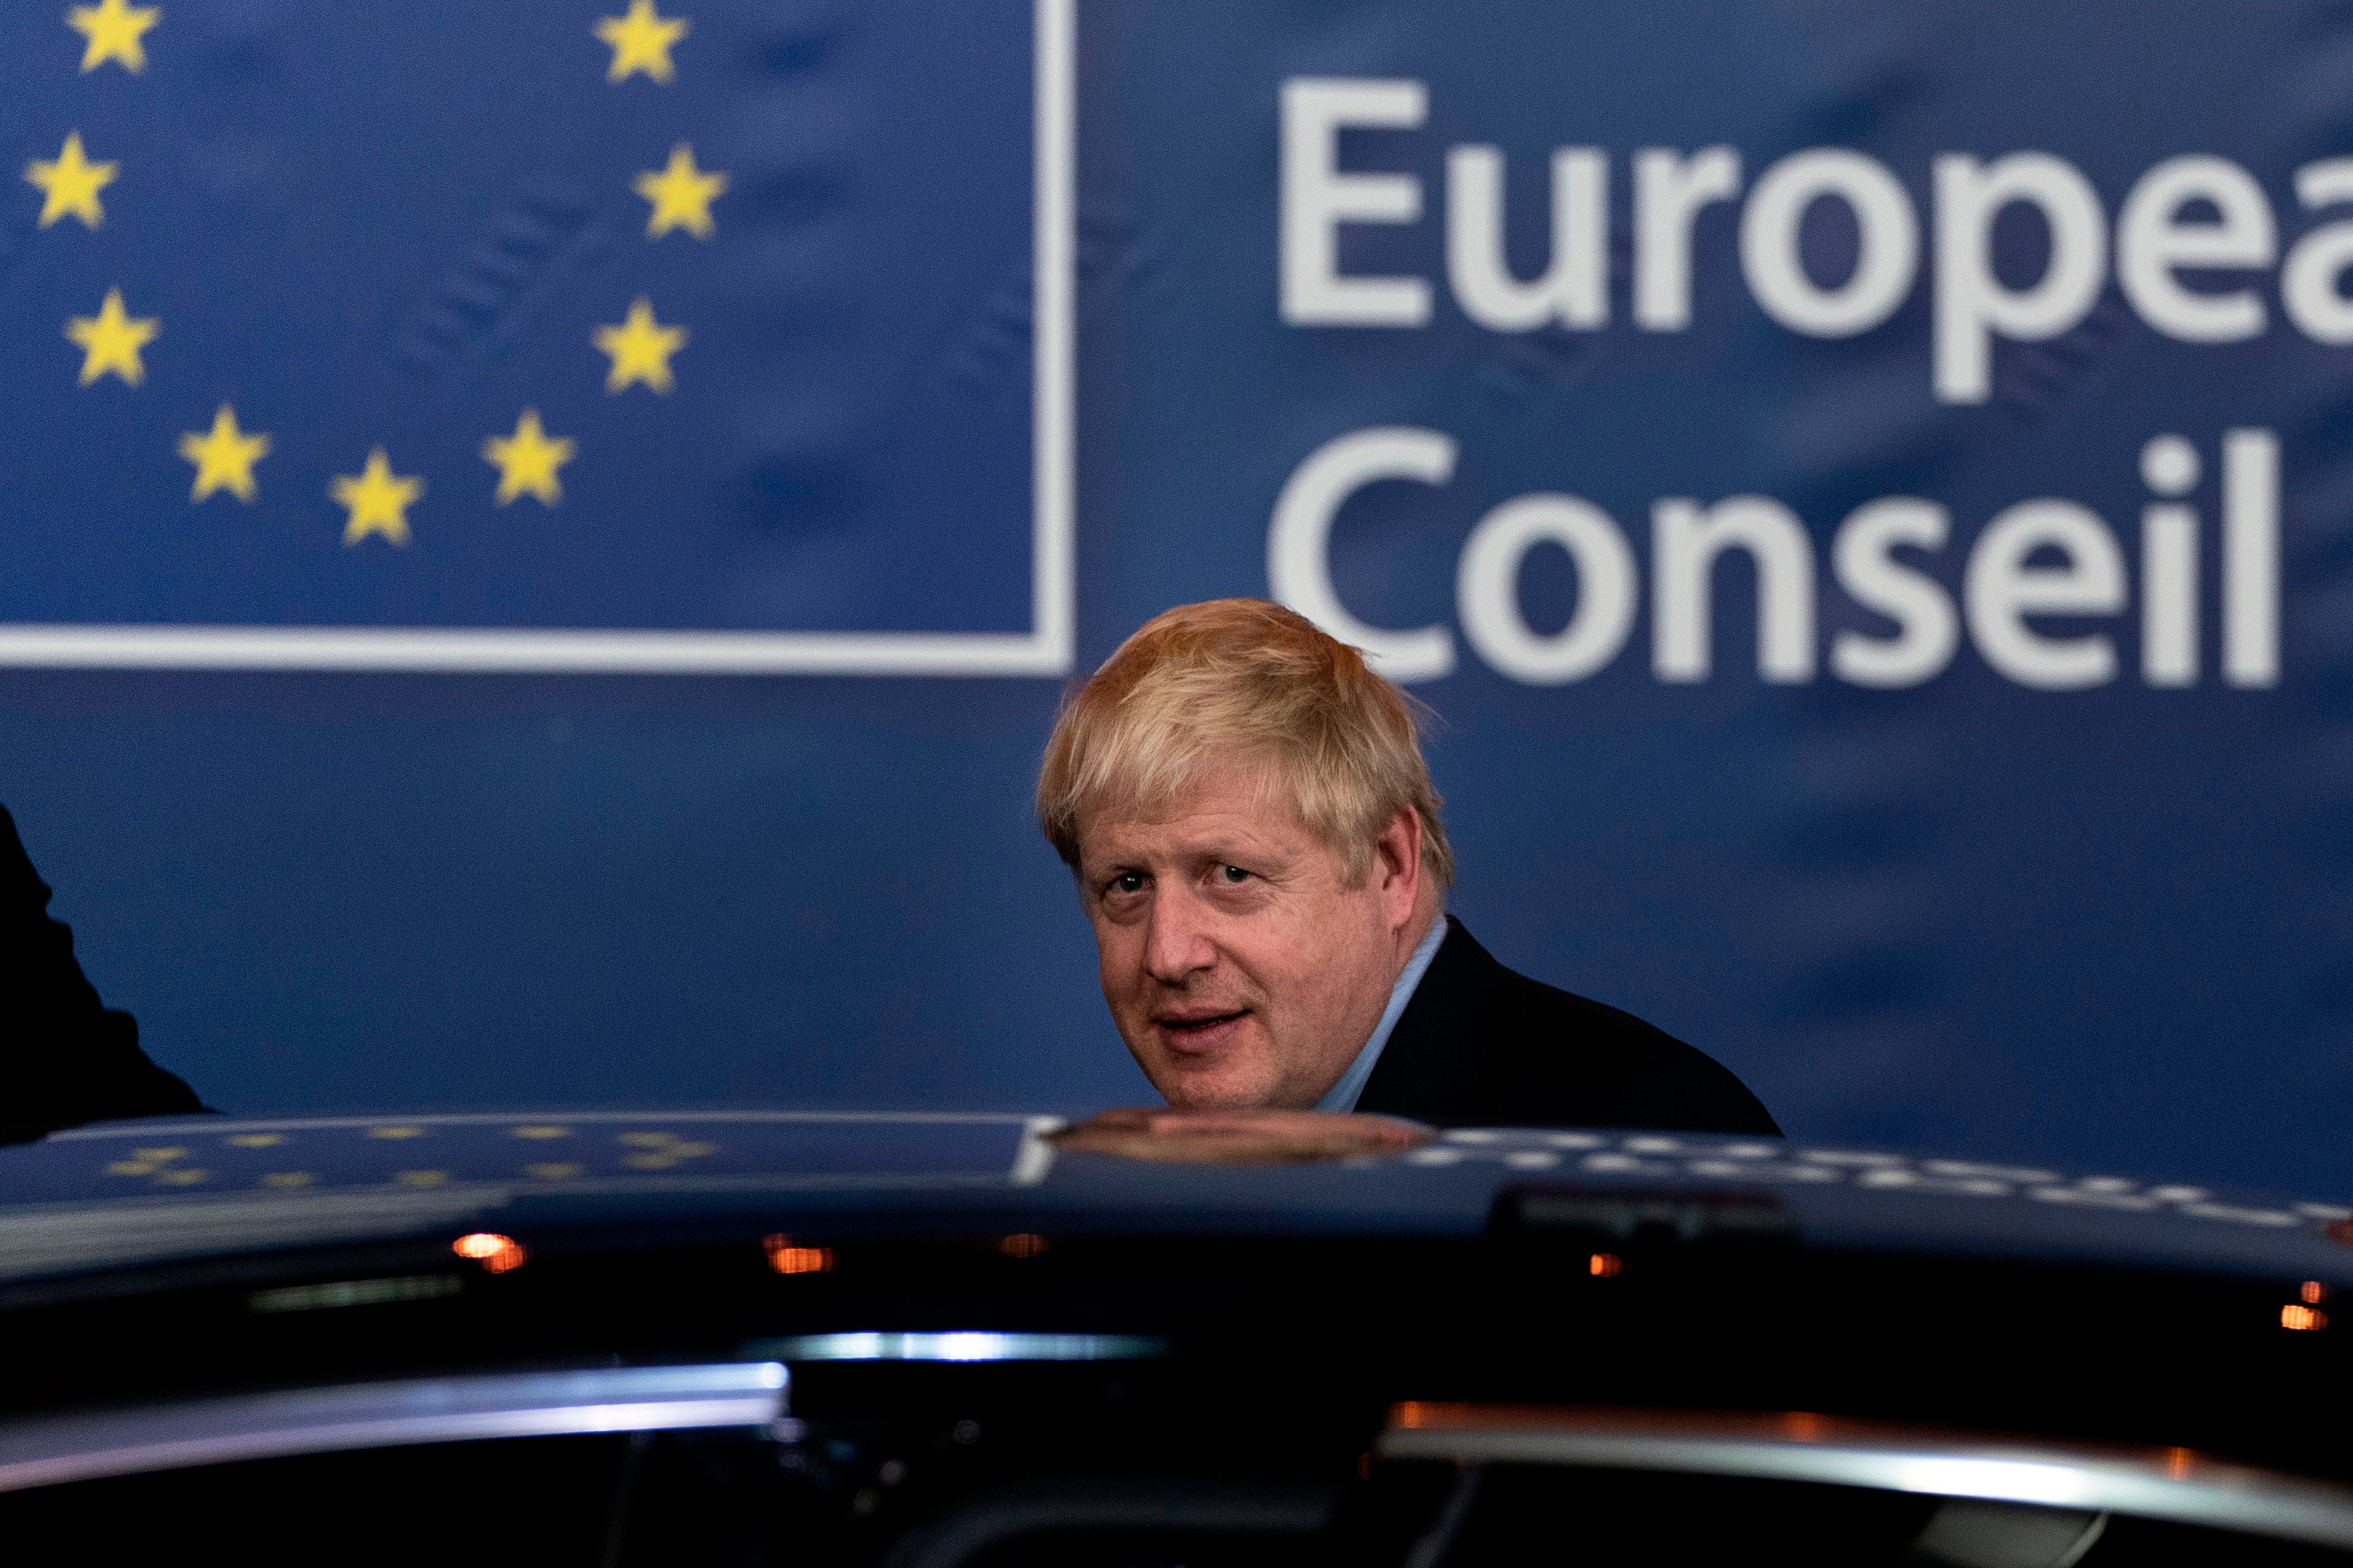 Boris Johnson at a summit in Brussels last year